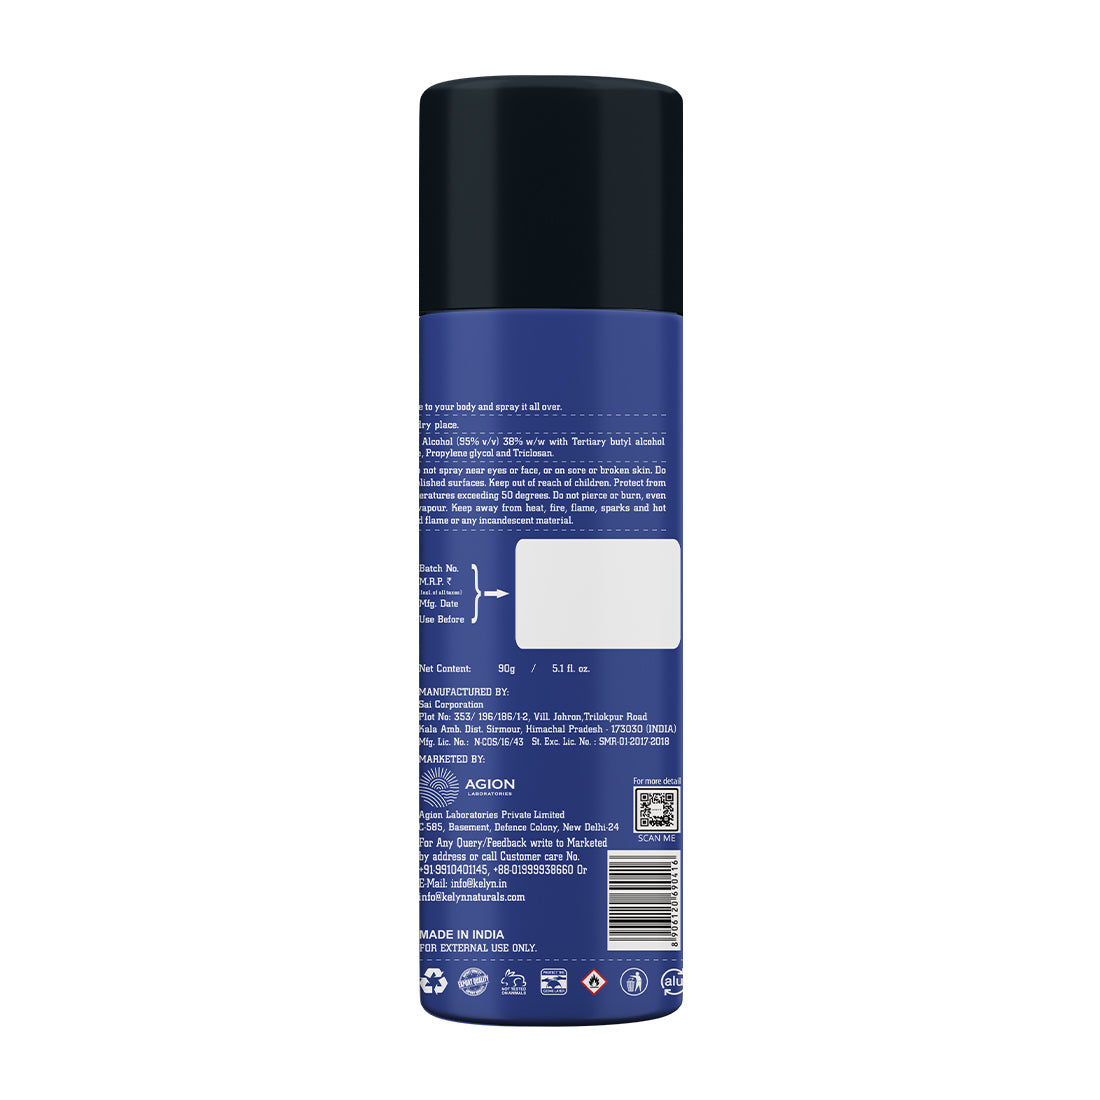 Legend Wave Deodorant for Men Body Spray, 150 ml